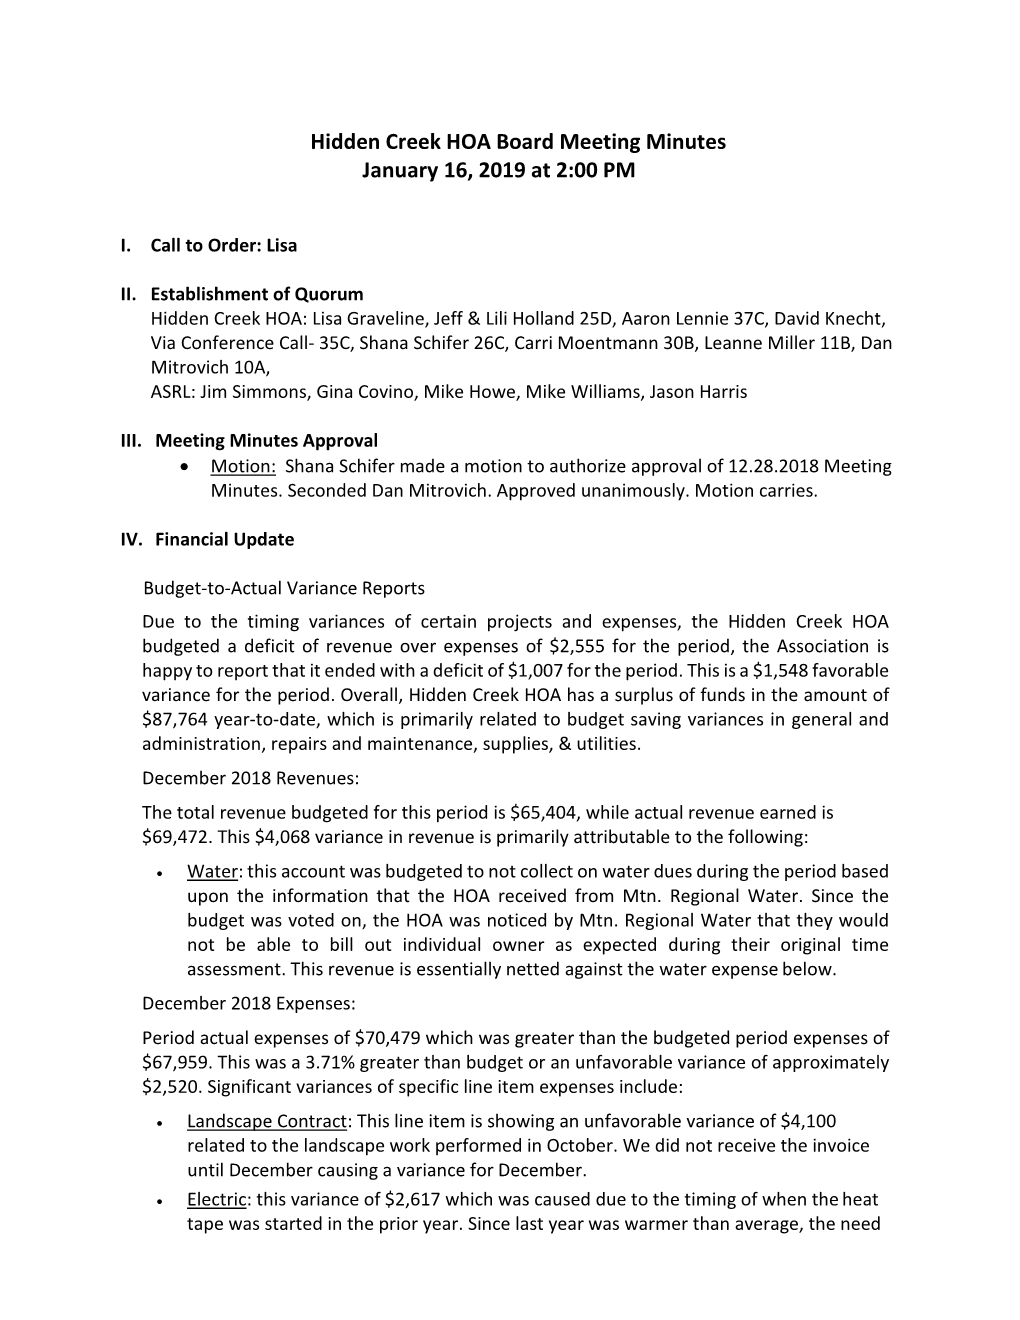 Hidden Creek HOA Board Meeting Minutes January 16, 2019 at 2:00 PM